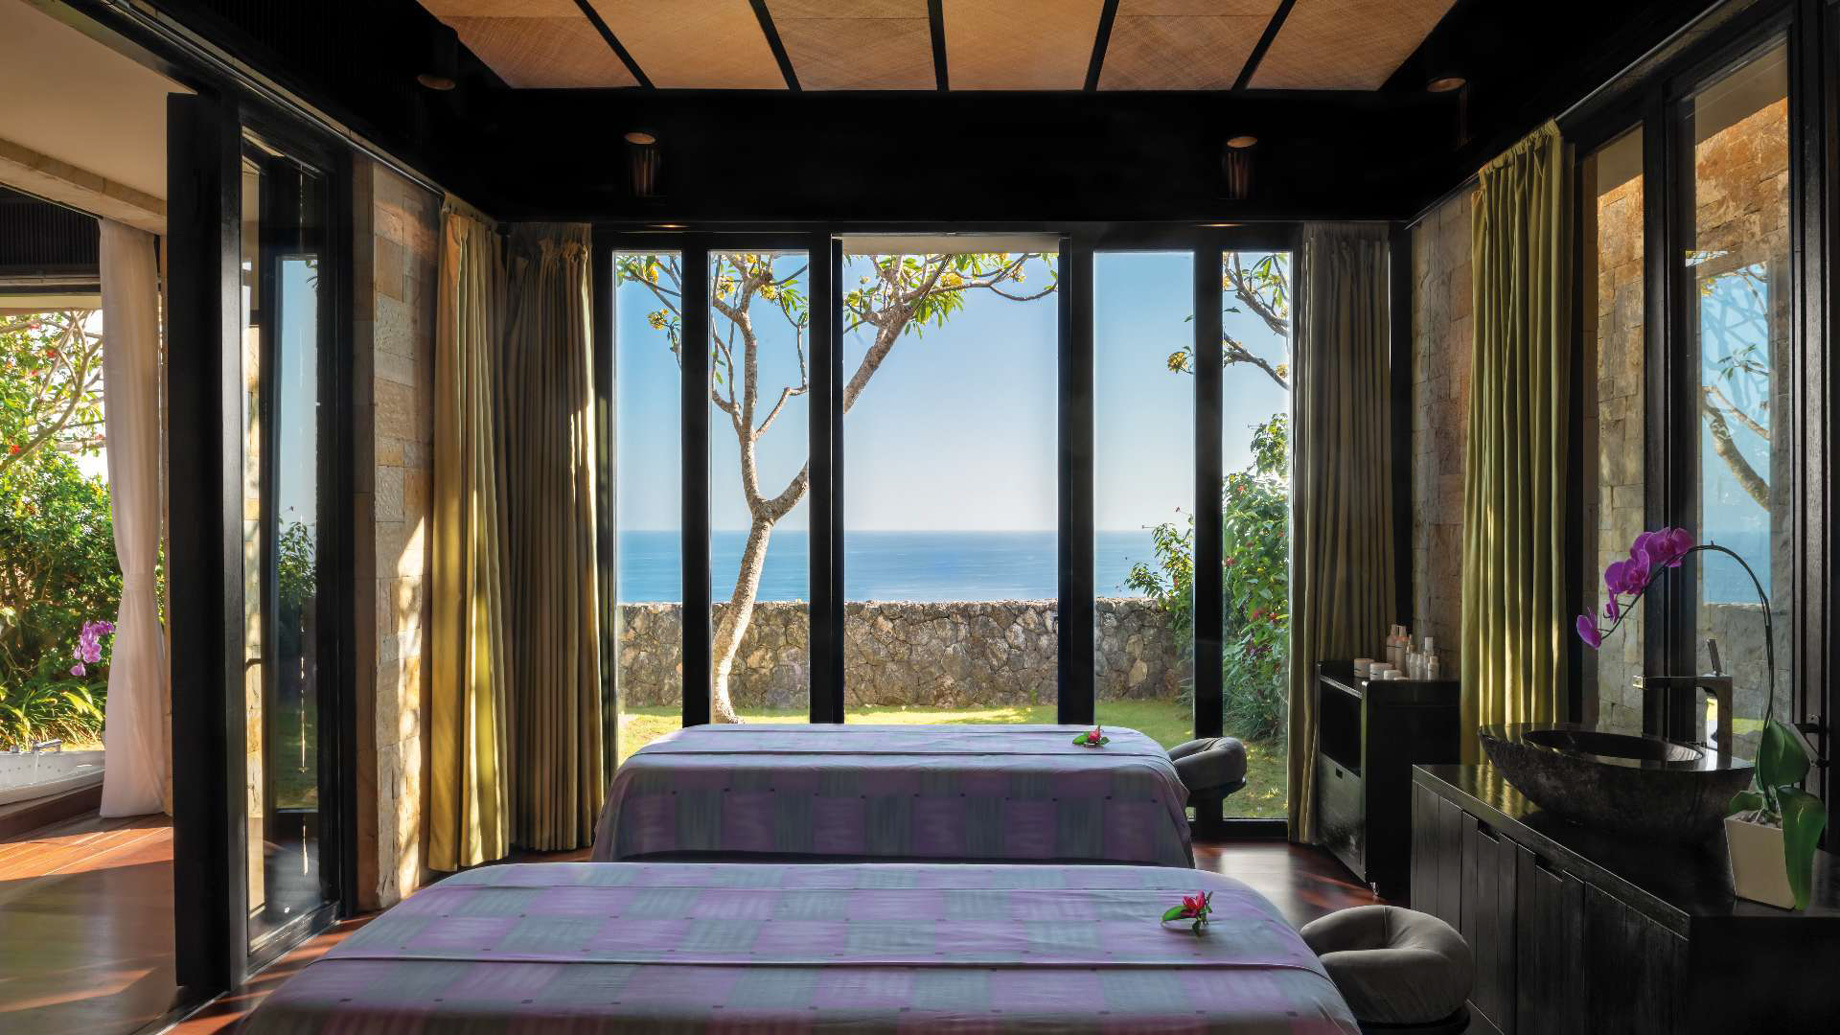 Bvlgari Resort Bali – Uluwatu, Bali, Indonesia – The Bvlgari Spa Ocean View Double Treatment Room